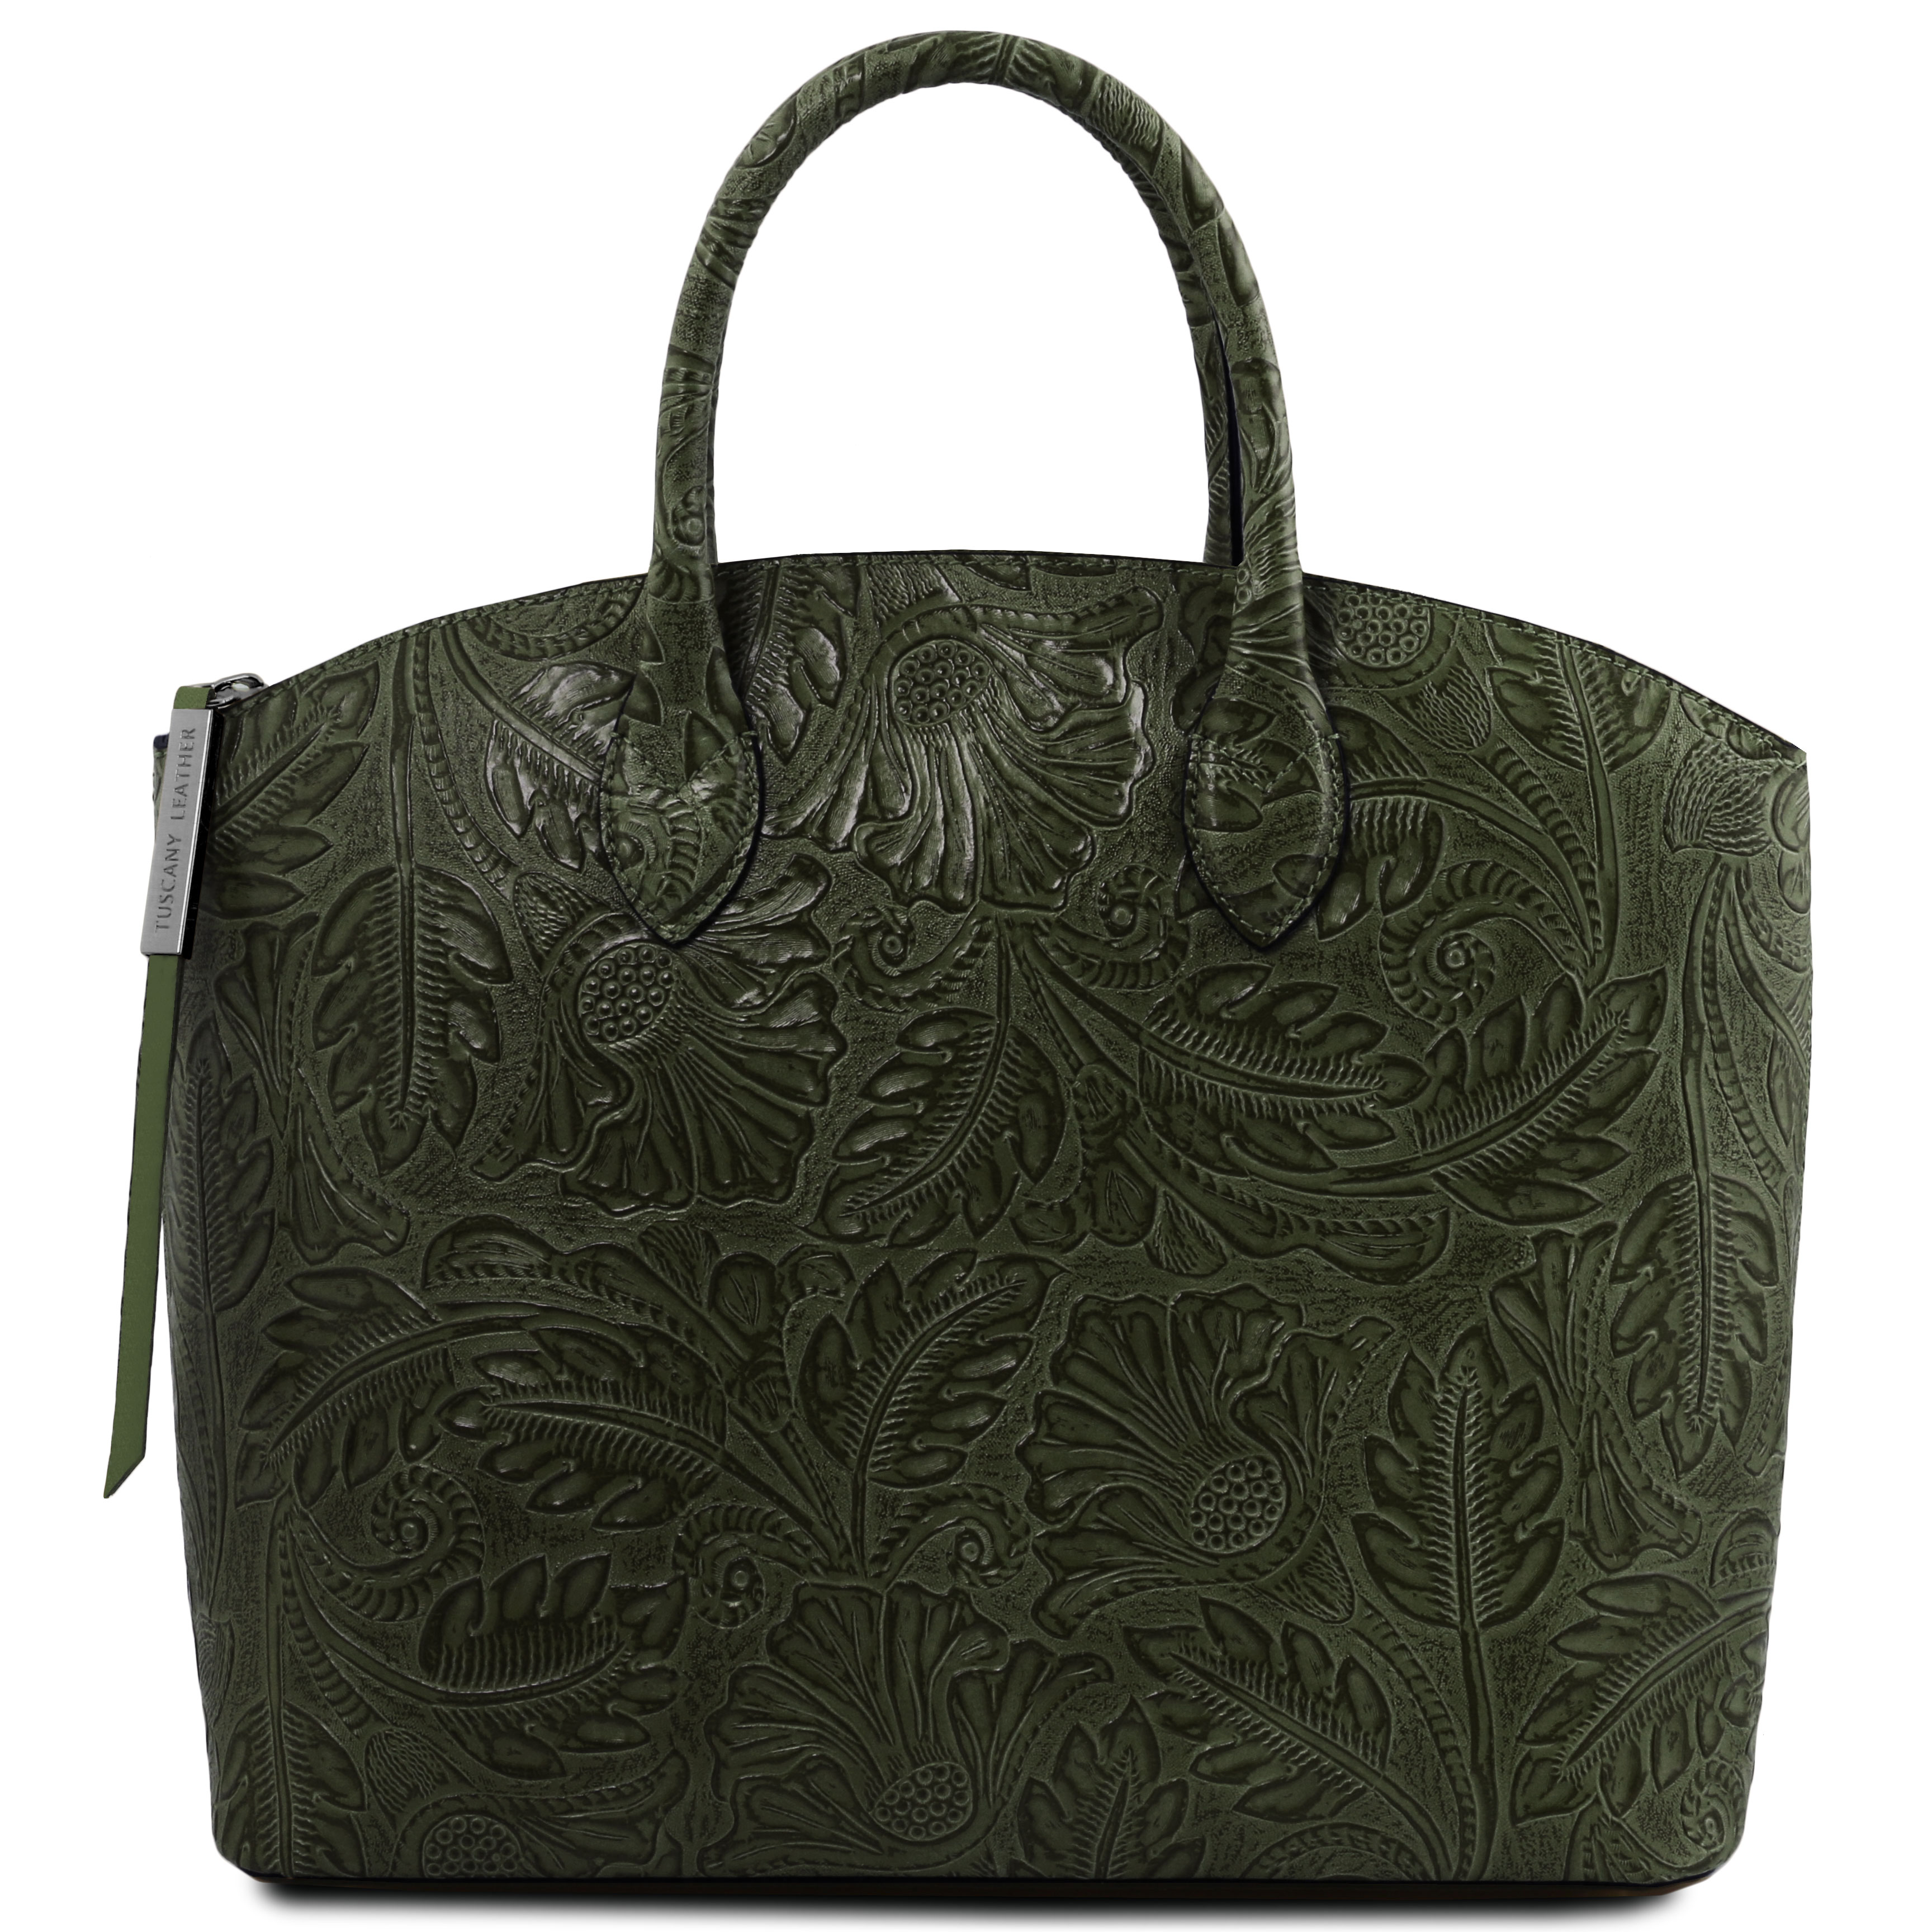 Geanta de mana Tuscany Leather verde cu pattern floral Gaia